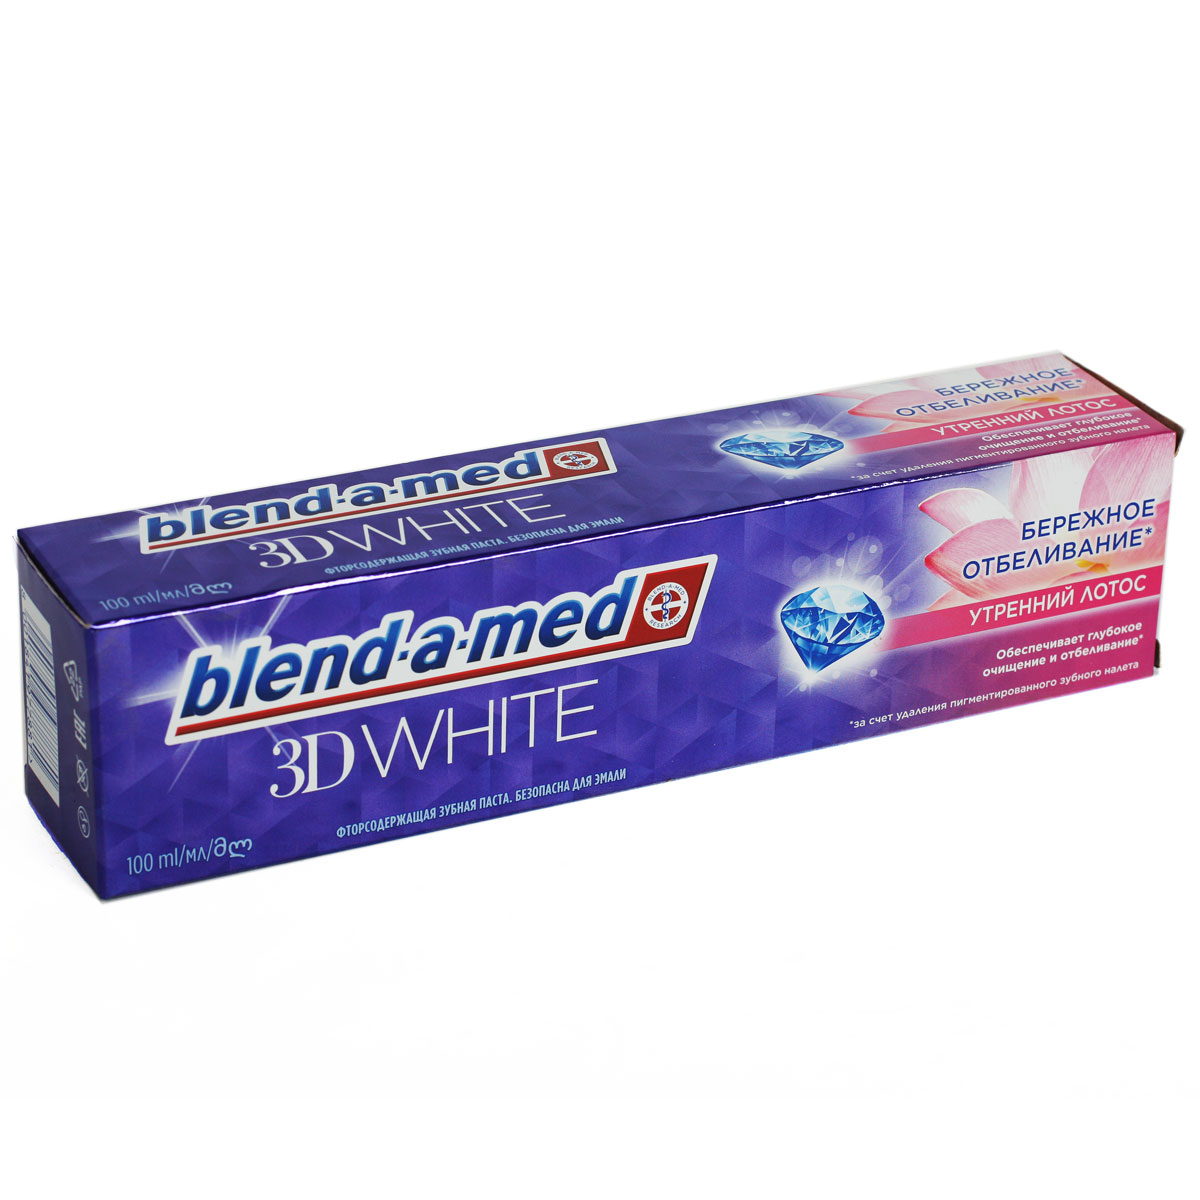 Blend-a-med 3D WHITE Утренний лотос зубная паста 100мл